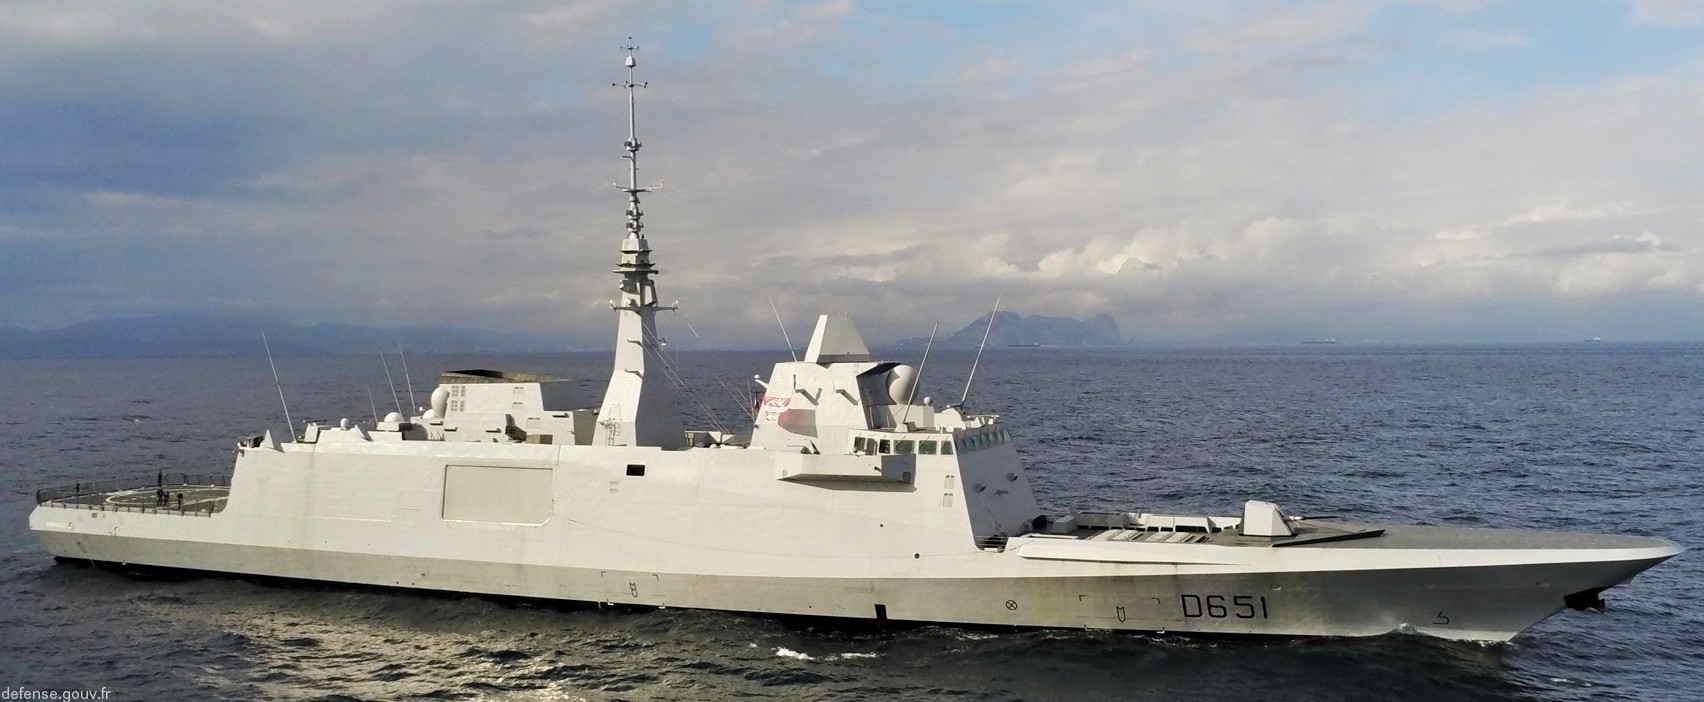 d-651 fs normandie fremm aquitaine class frigate fregate multi purpose french navy marine nationale 15